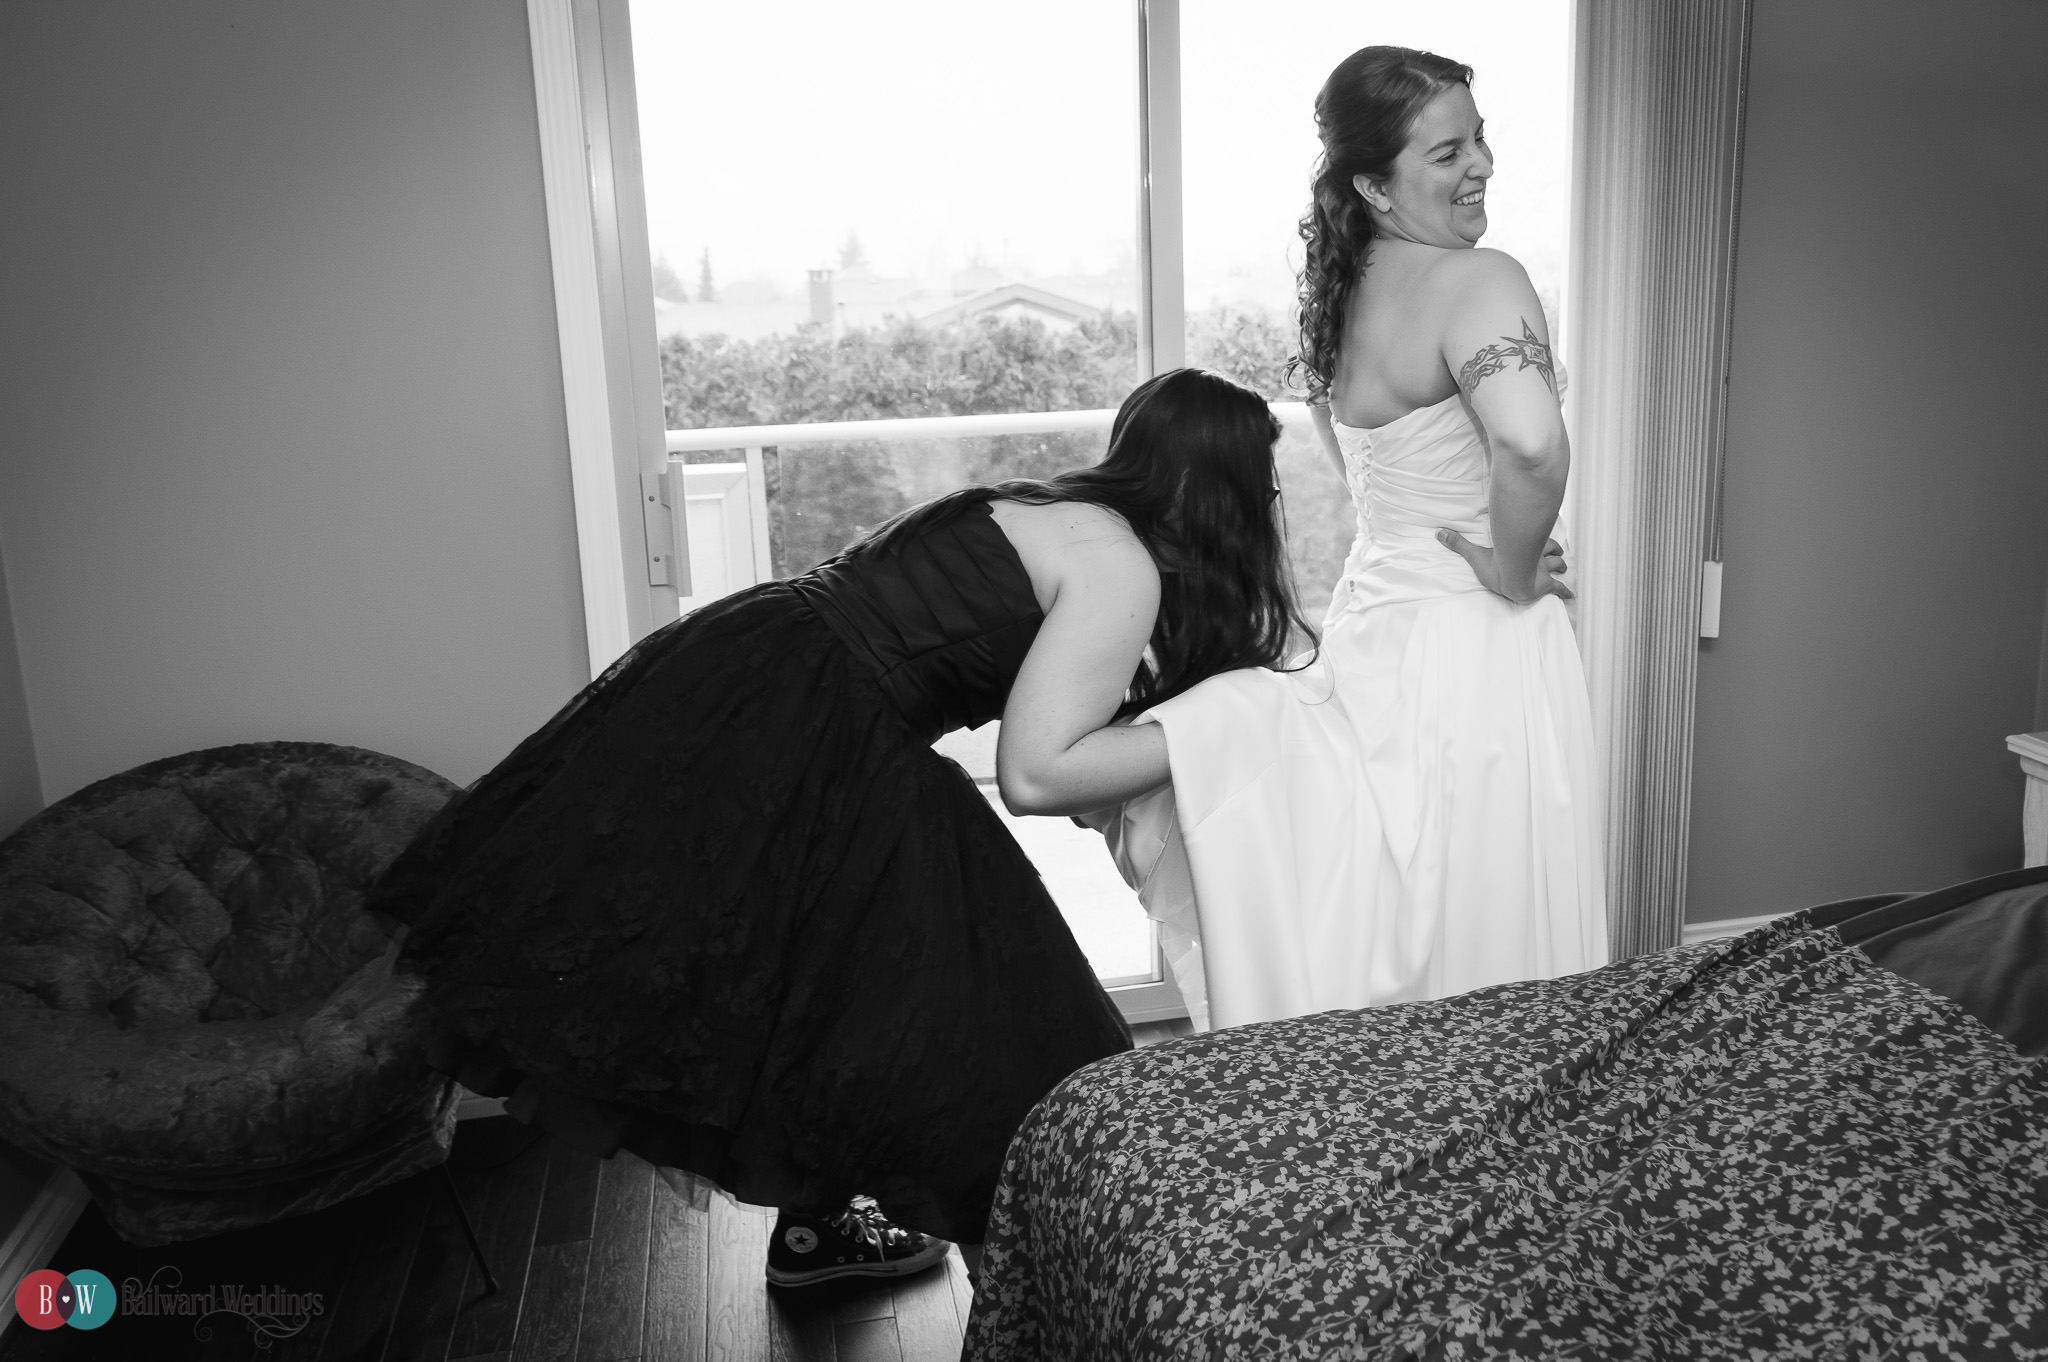 Bride and bridesmaid getting ready, bridesmaid's hand up dress